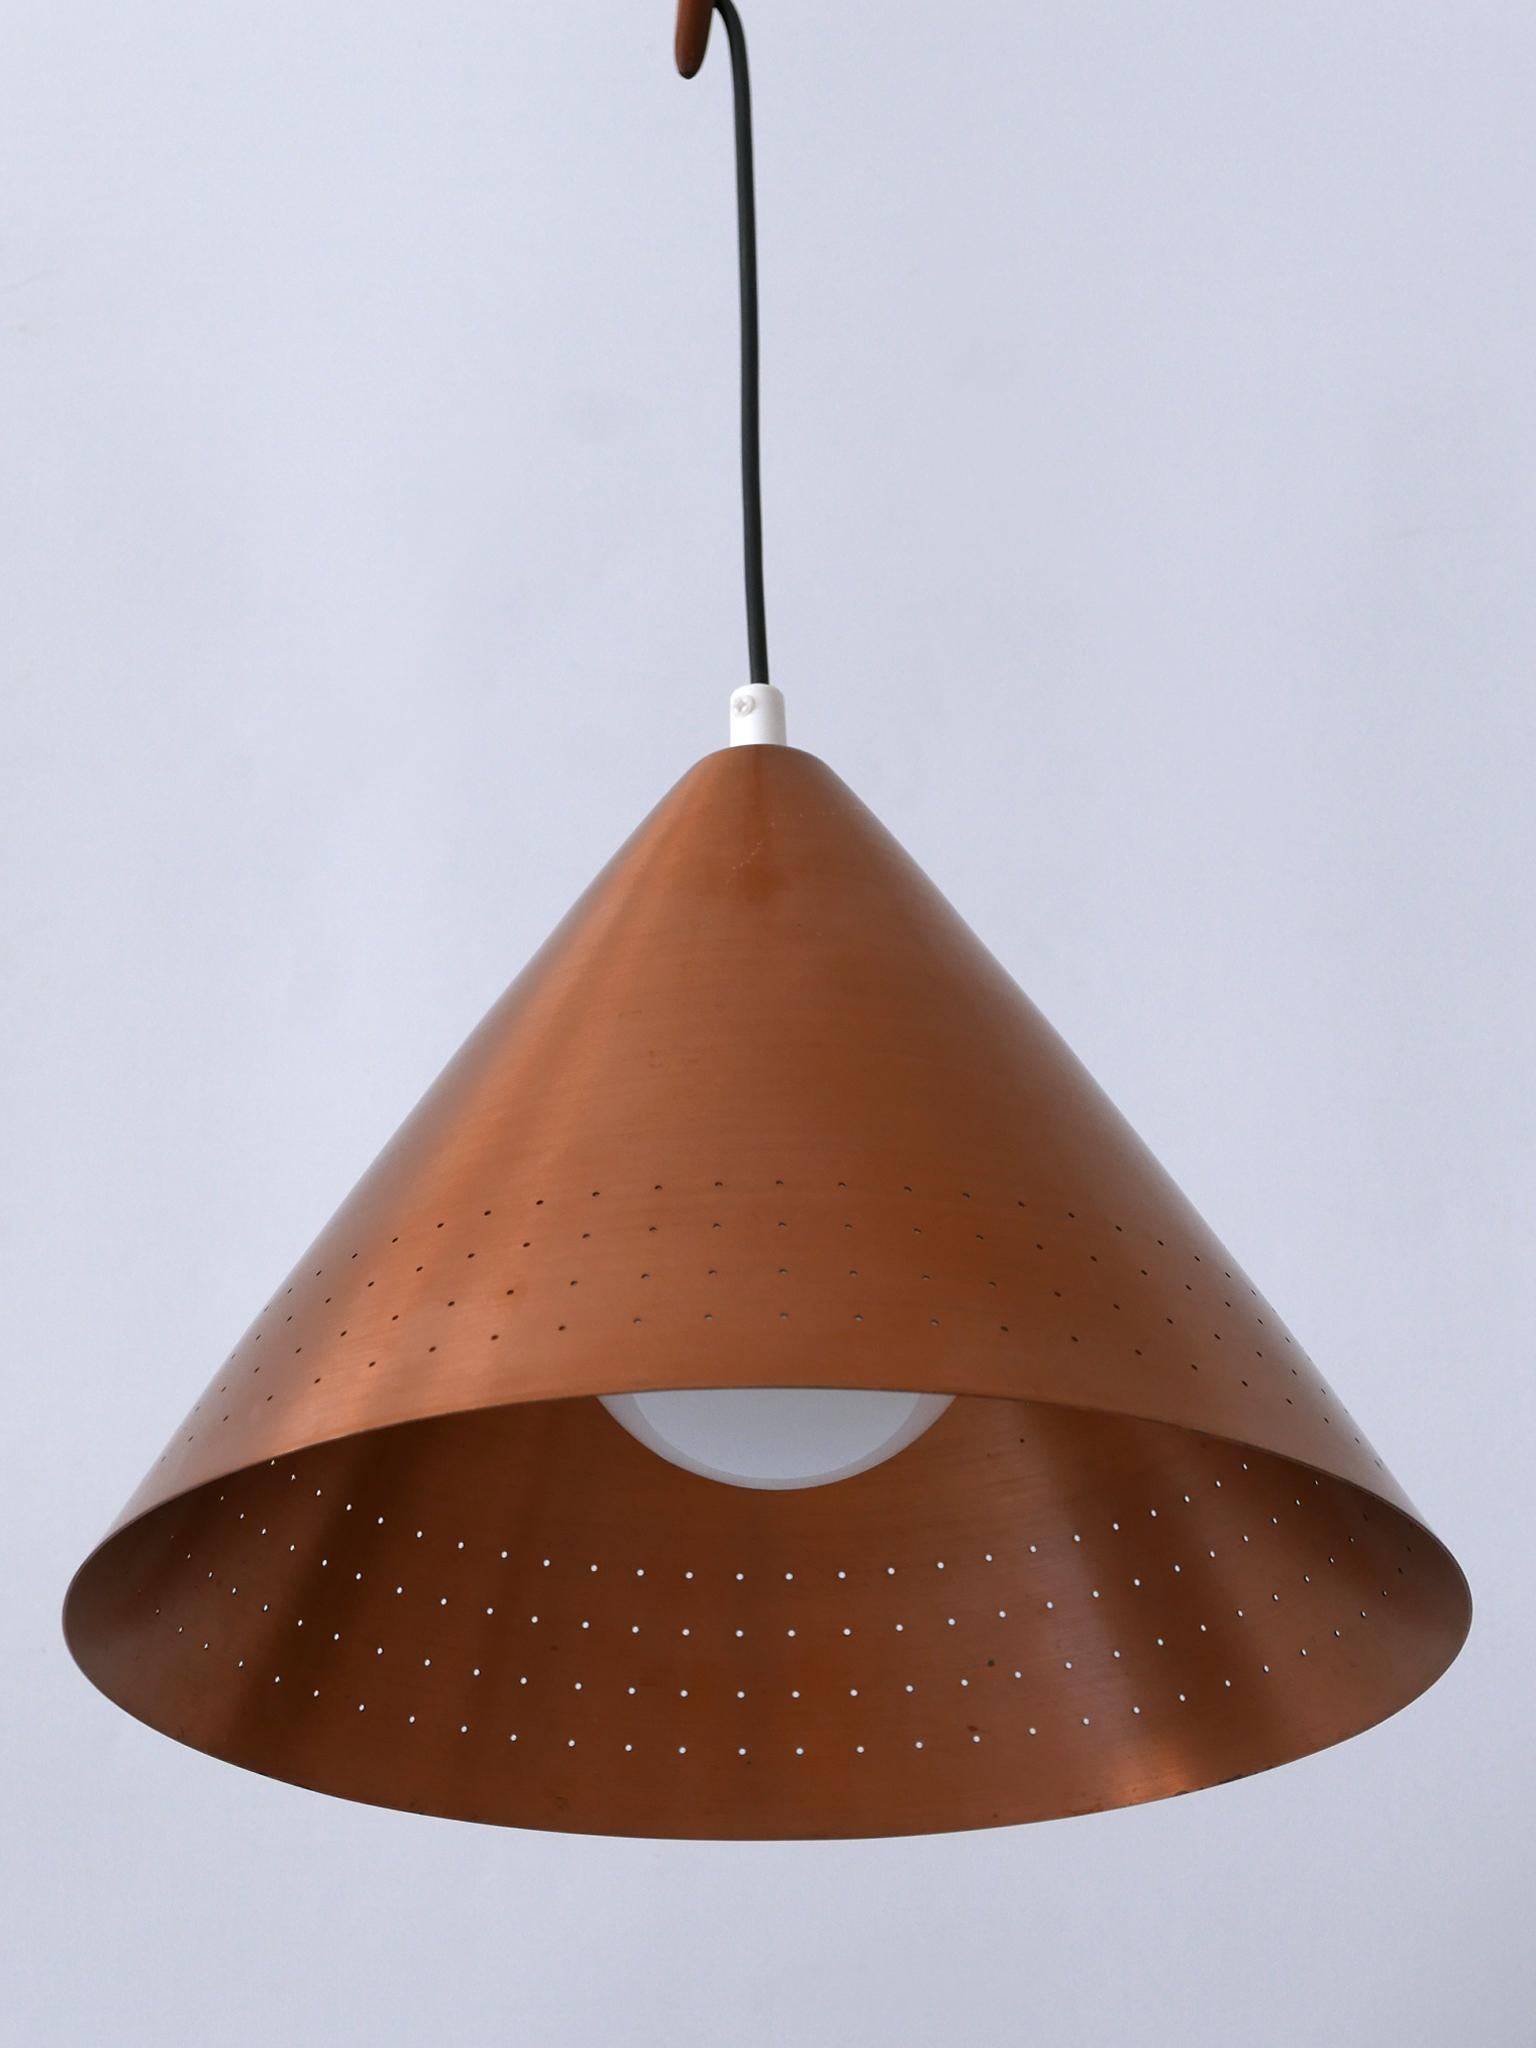 Rare Mid-Century Modern Scandinavian Copper Pendant Lamp or Hanging Light  1960s For Sale 11